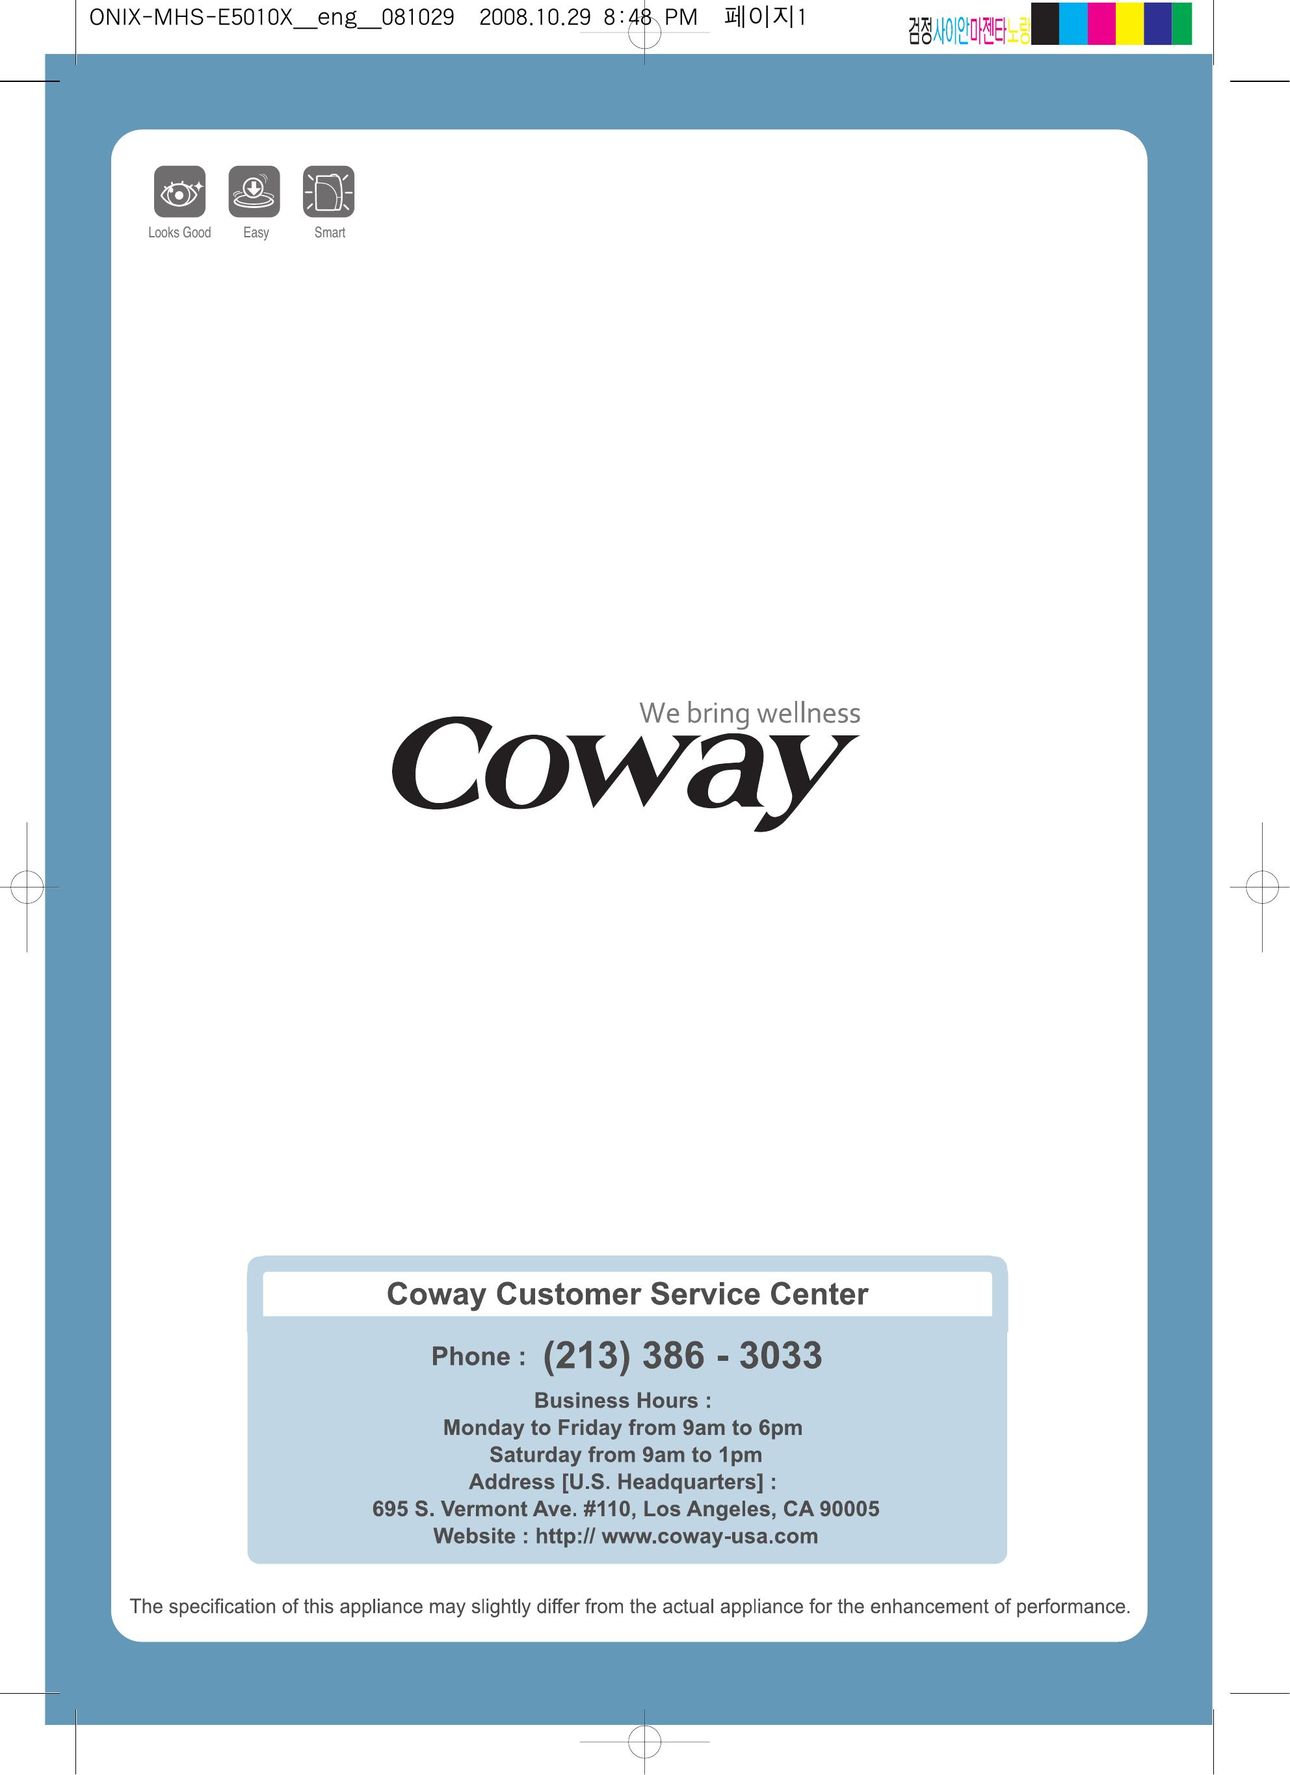 Coway MHS-E5010X Humidifier User Manual